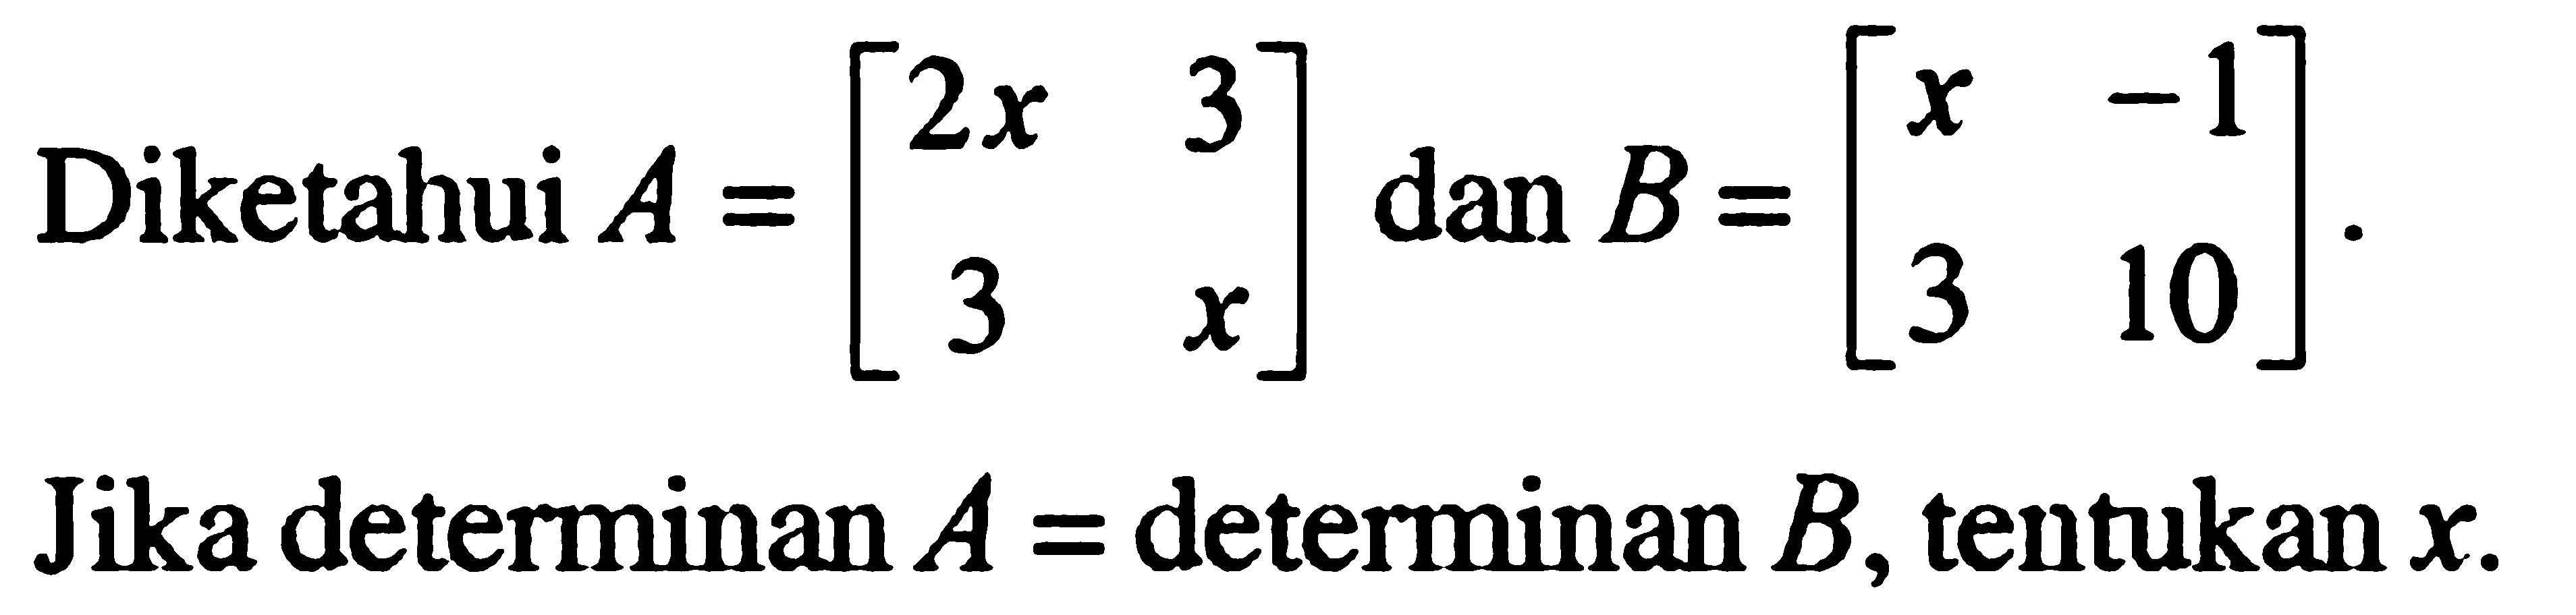 Diketahui A=[2x 3 3 x] dan B=[x -1 3 10] Jika determinan A = determinan B, tentukan x.